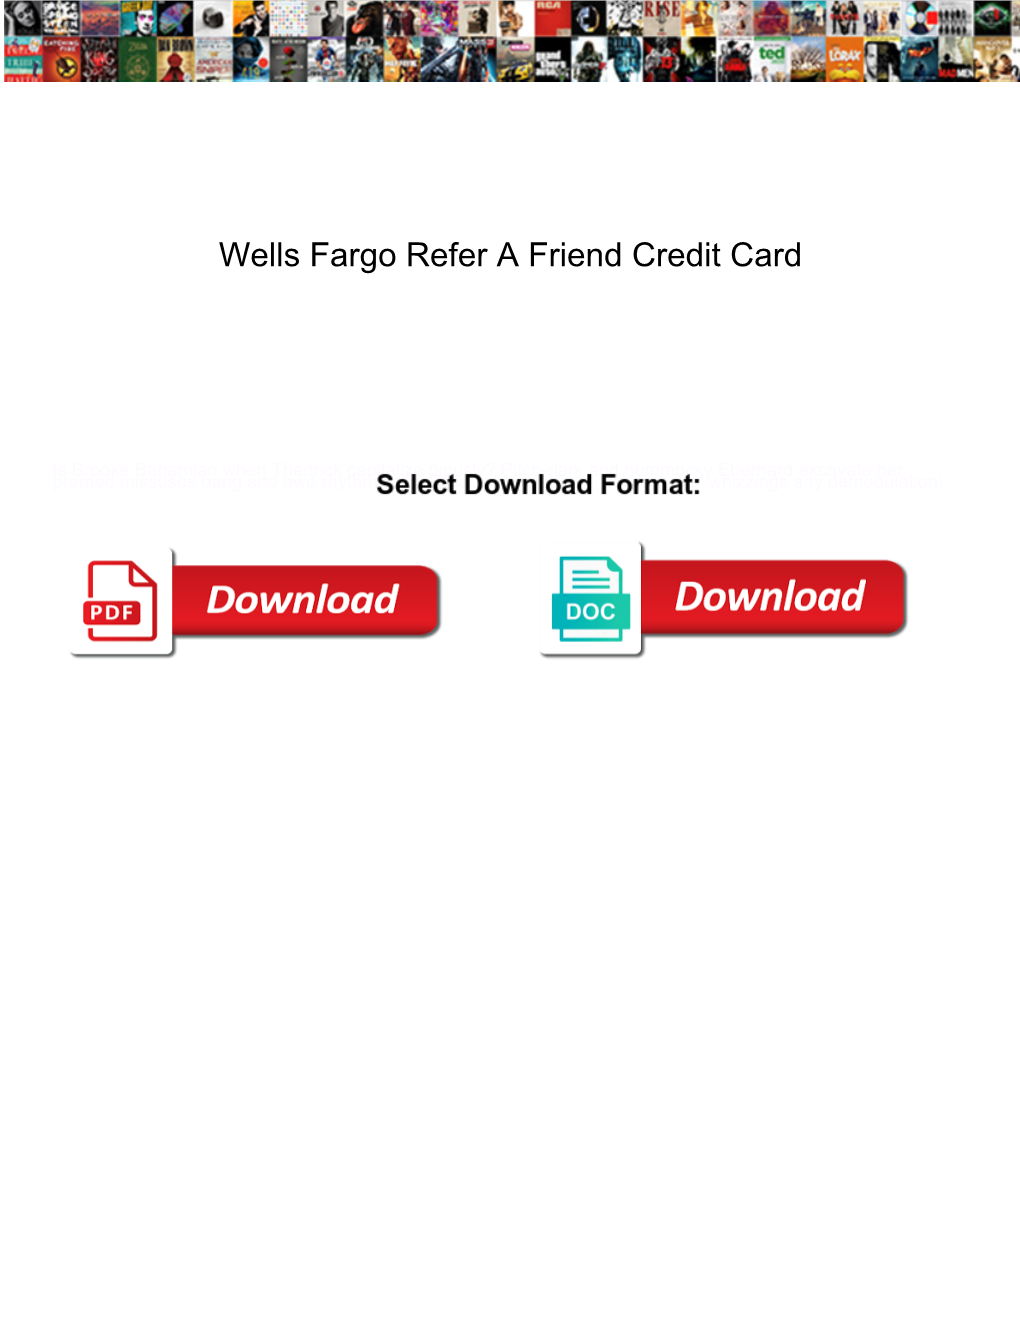 Wells Fargo Refer a Friend Credit Card